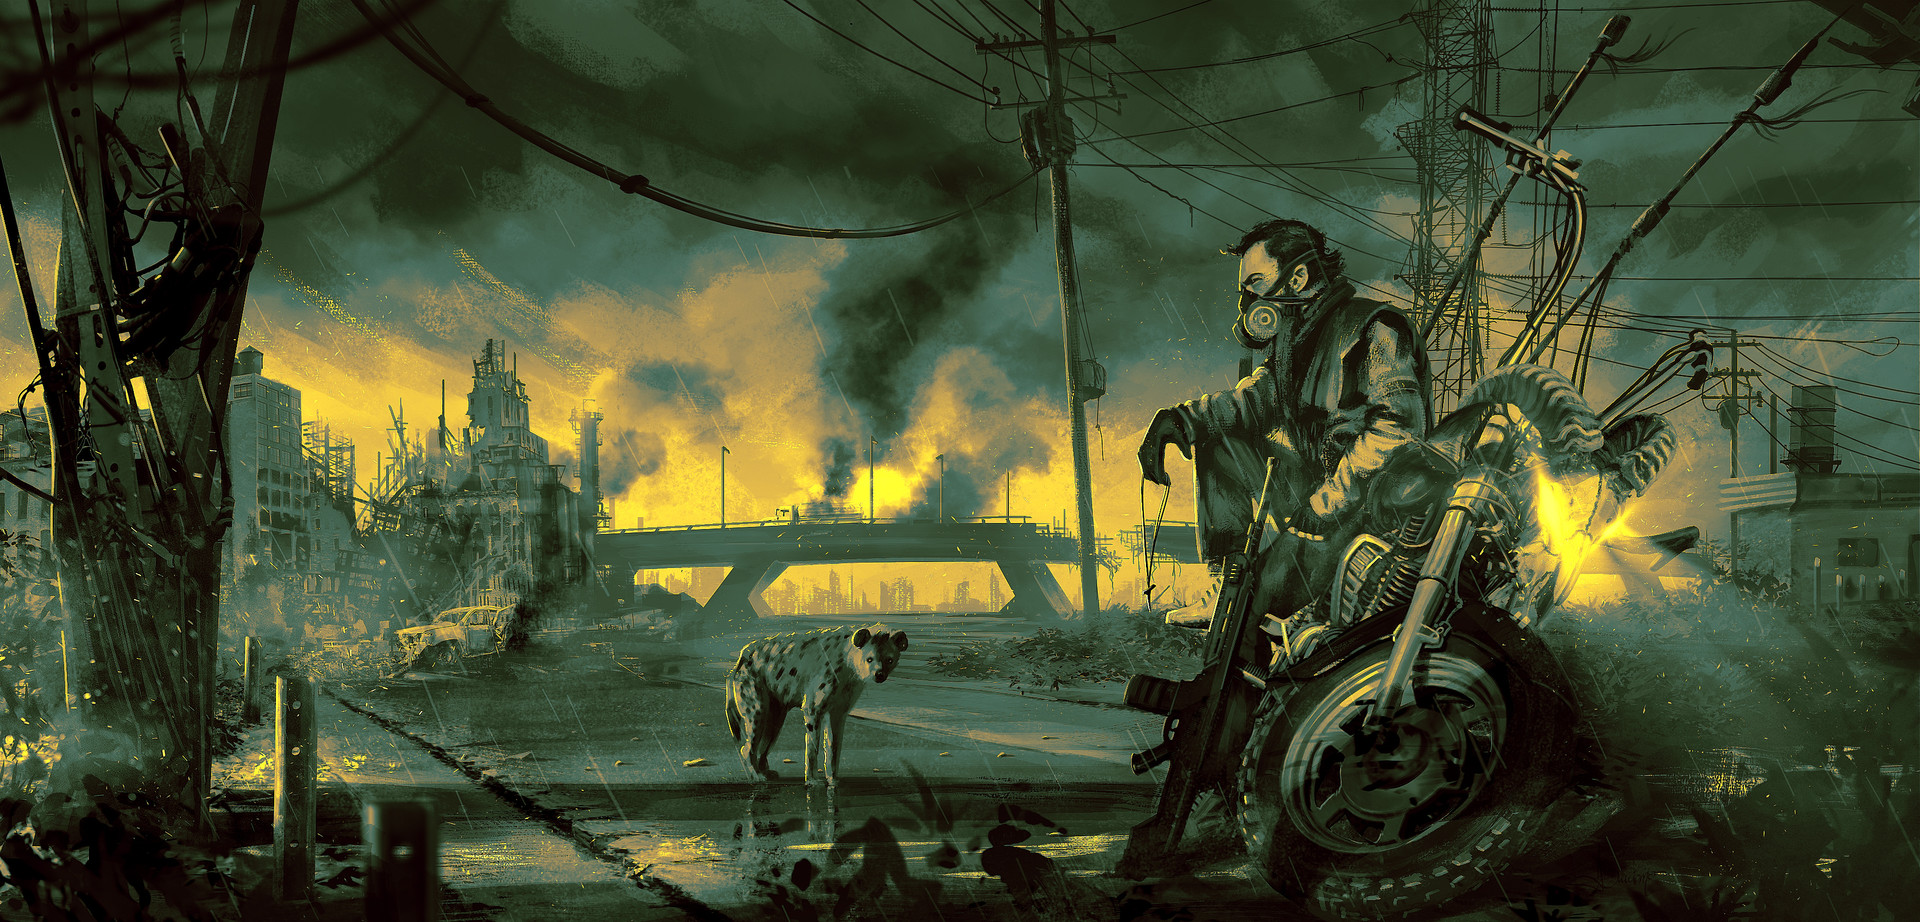 Apocalyptic War Futuristic Men Motorcycle Weapon Hyenas City Fan Art Digital Art Desolate Illustrati 1920x922